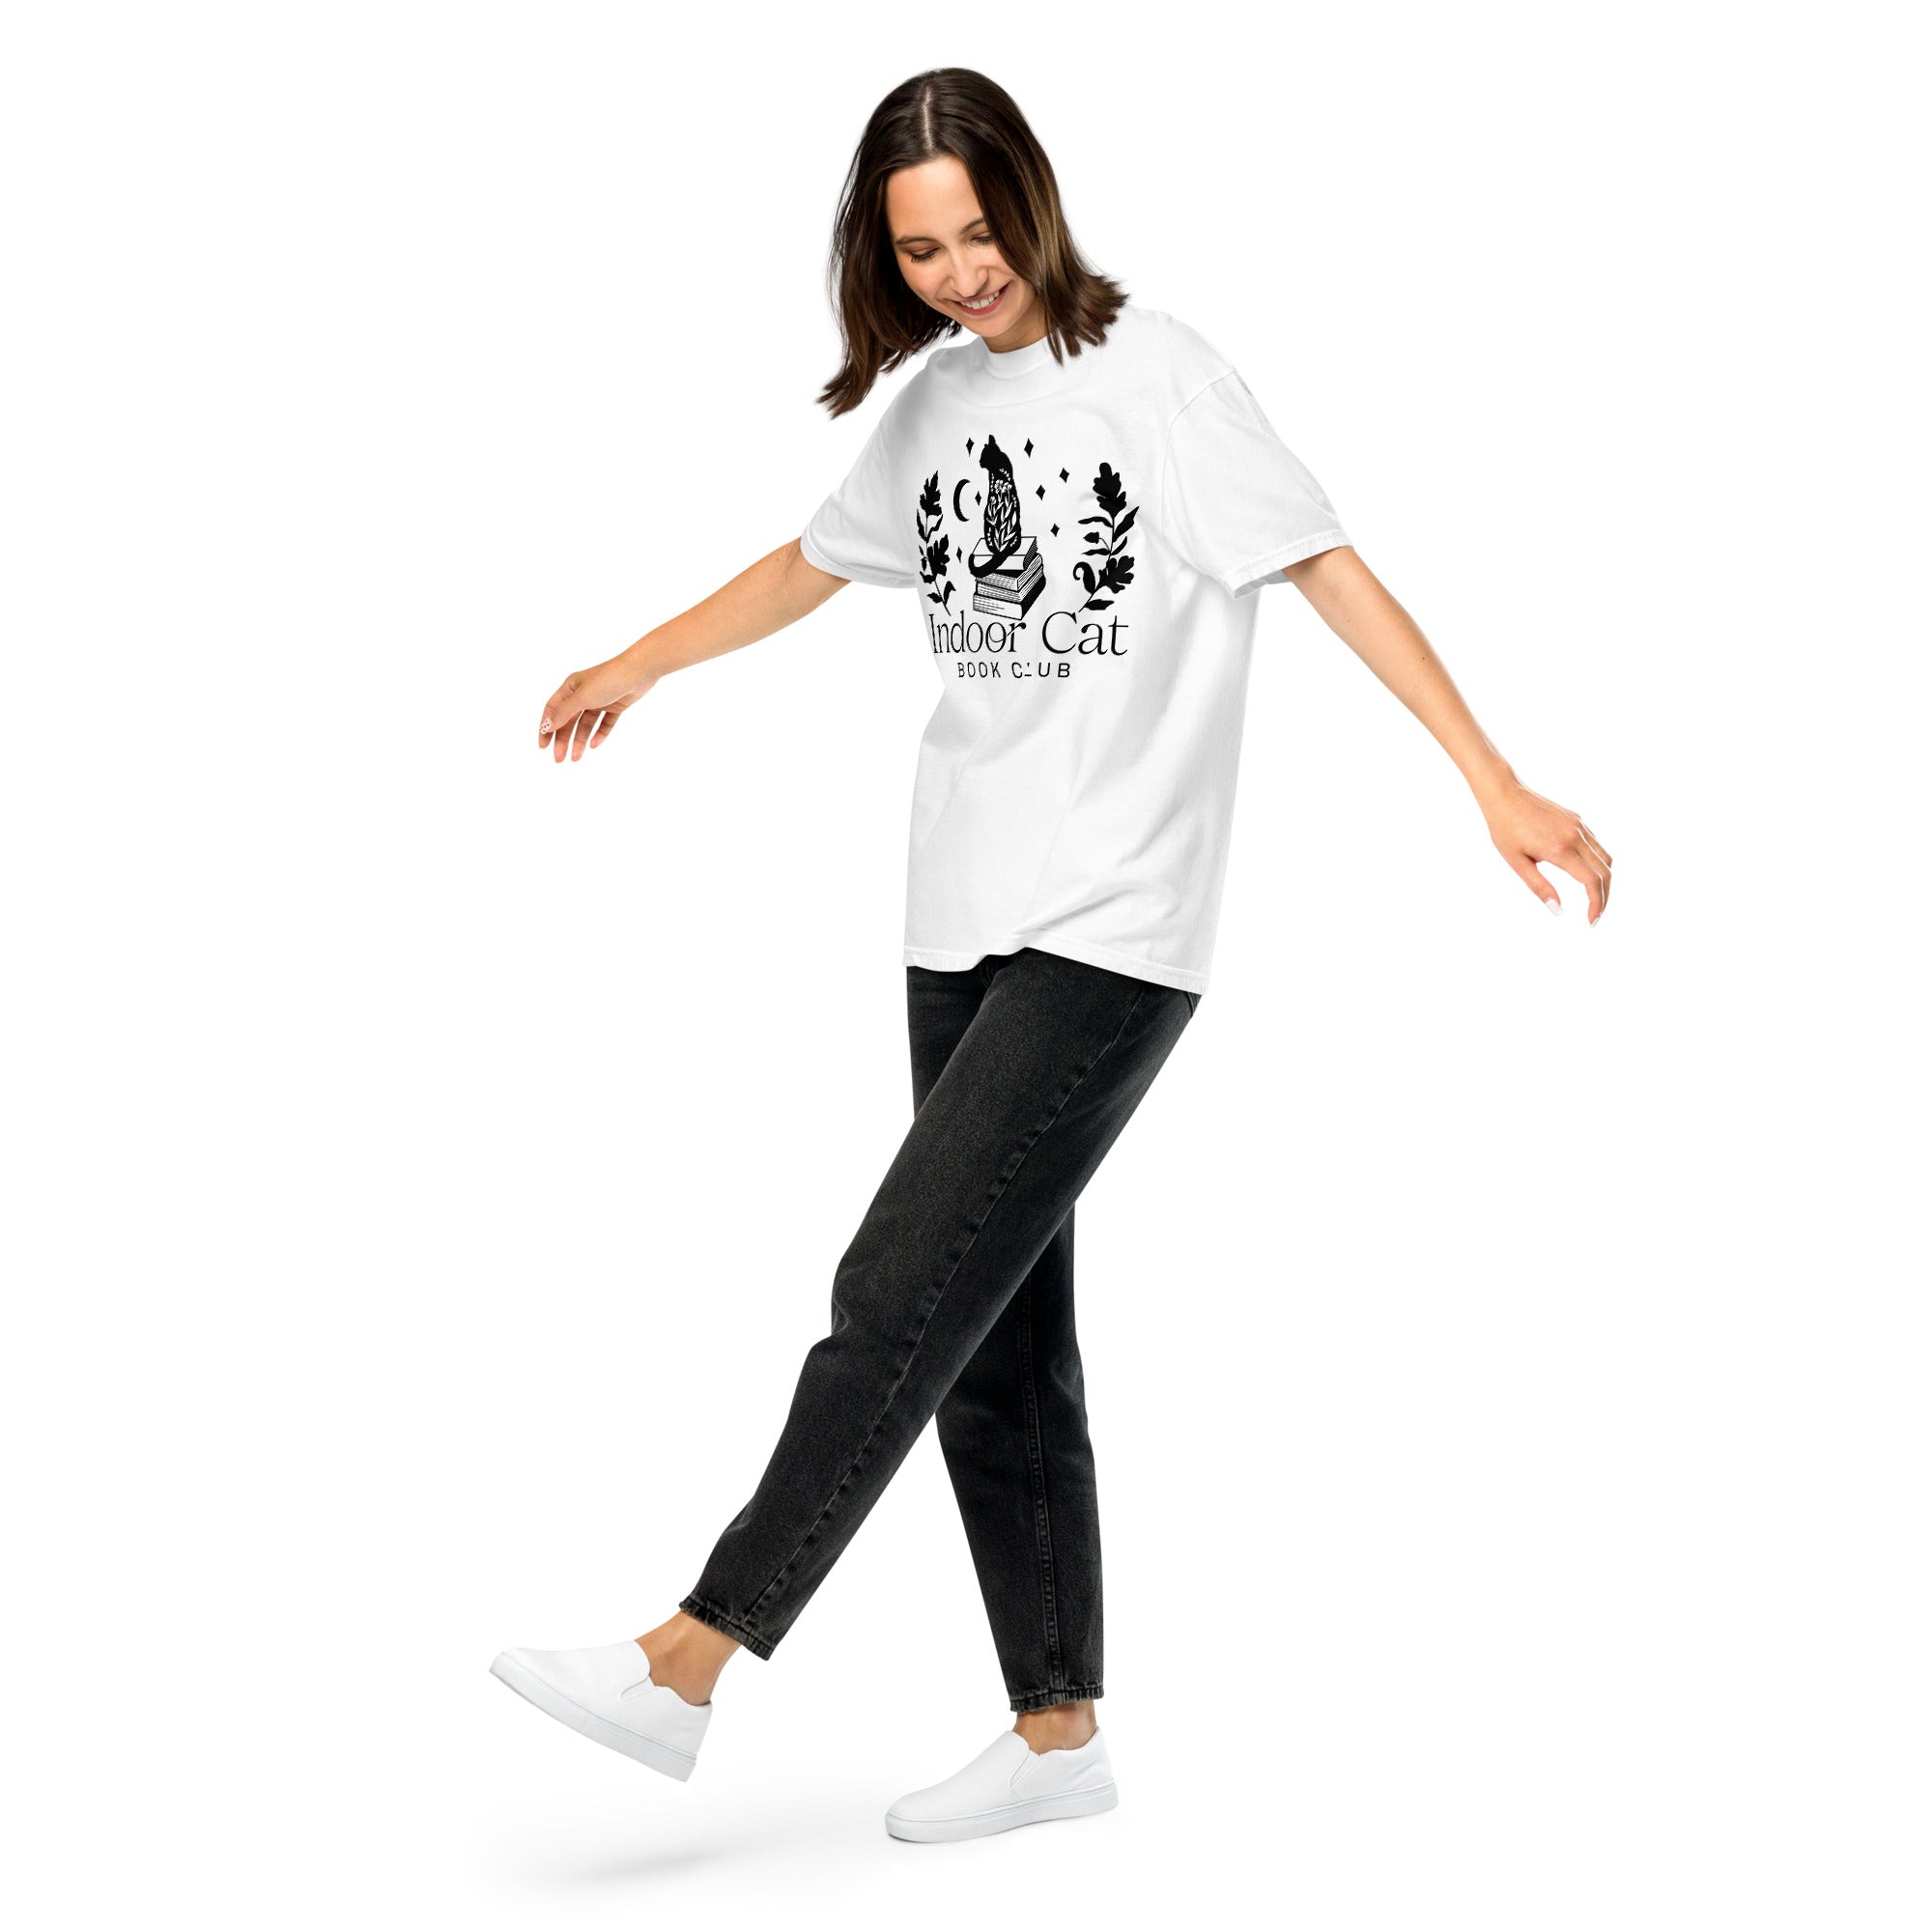 FireDrake Artistry™ Indoor Cat t-shirt, comfort colors brand in white, black design